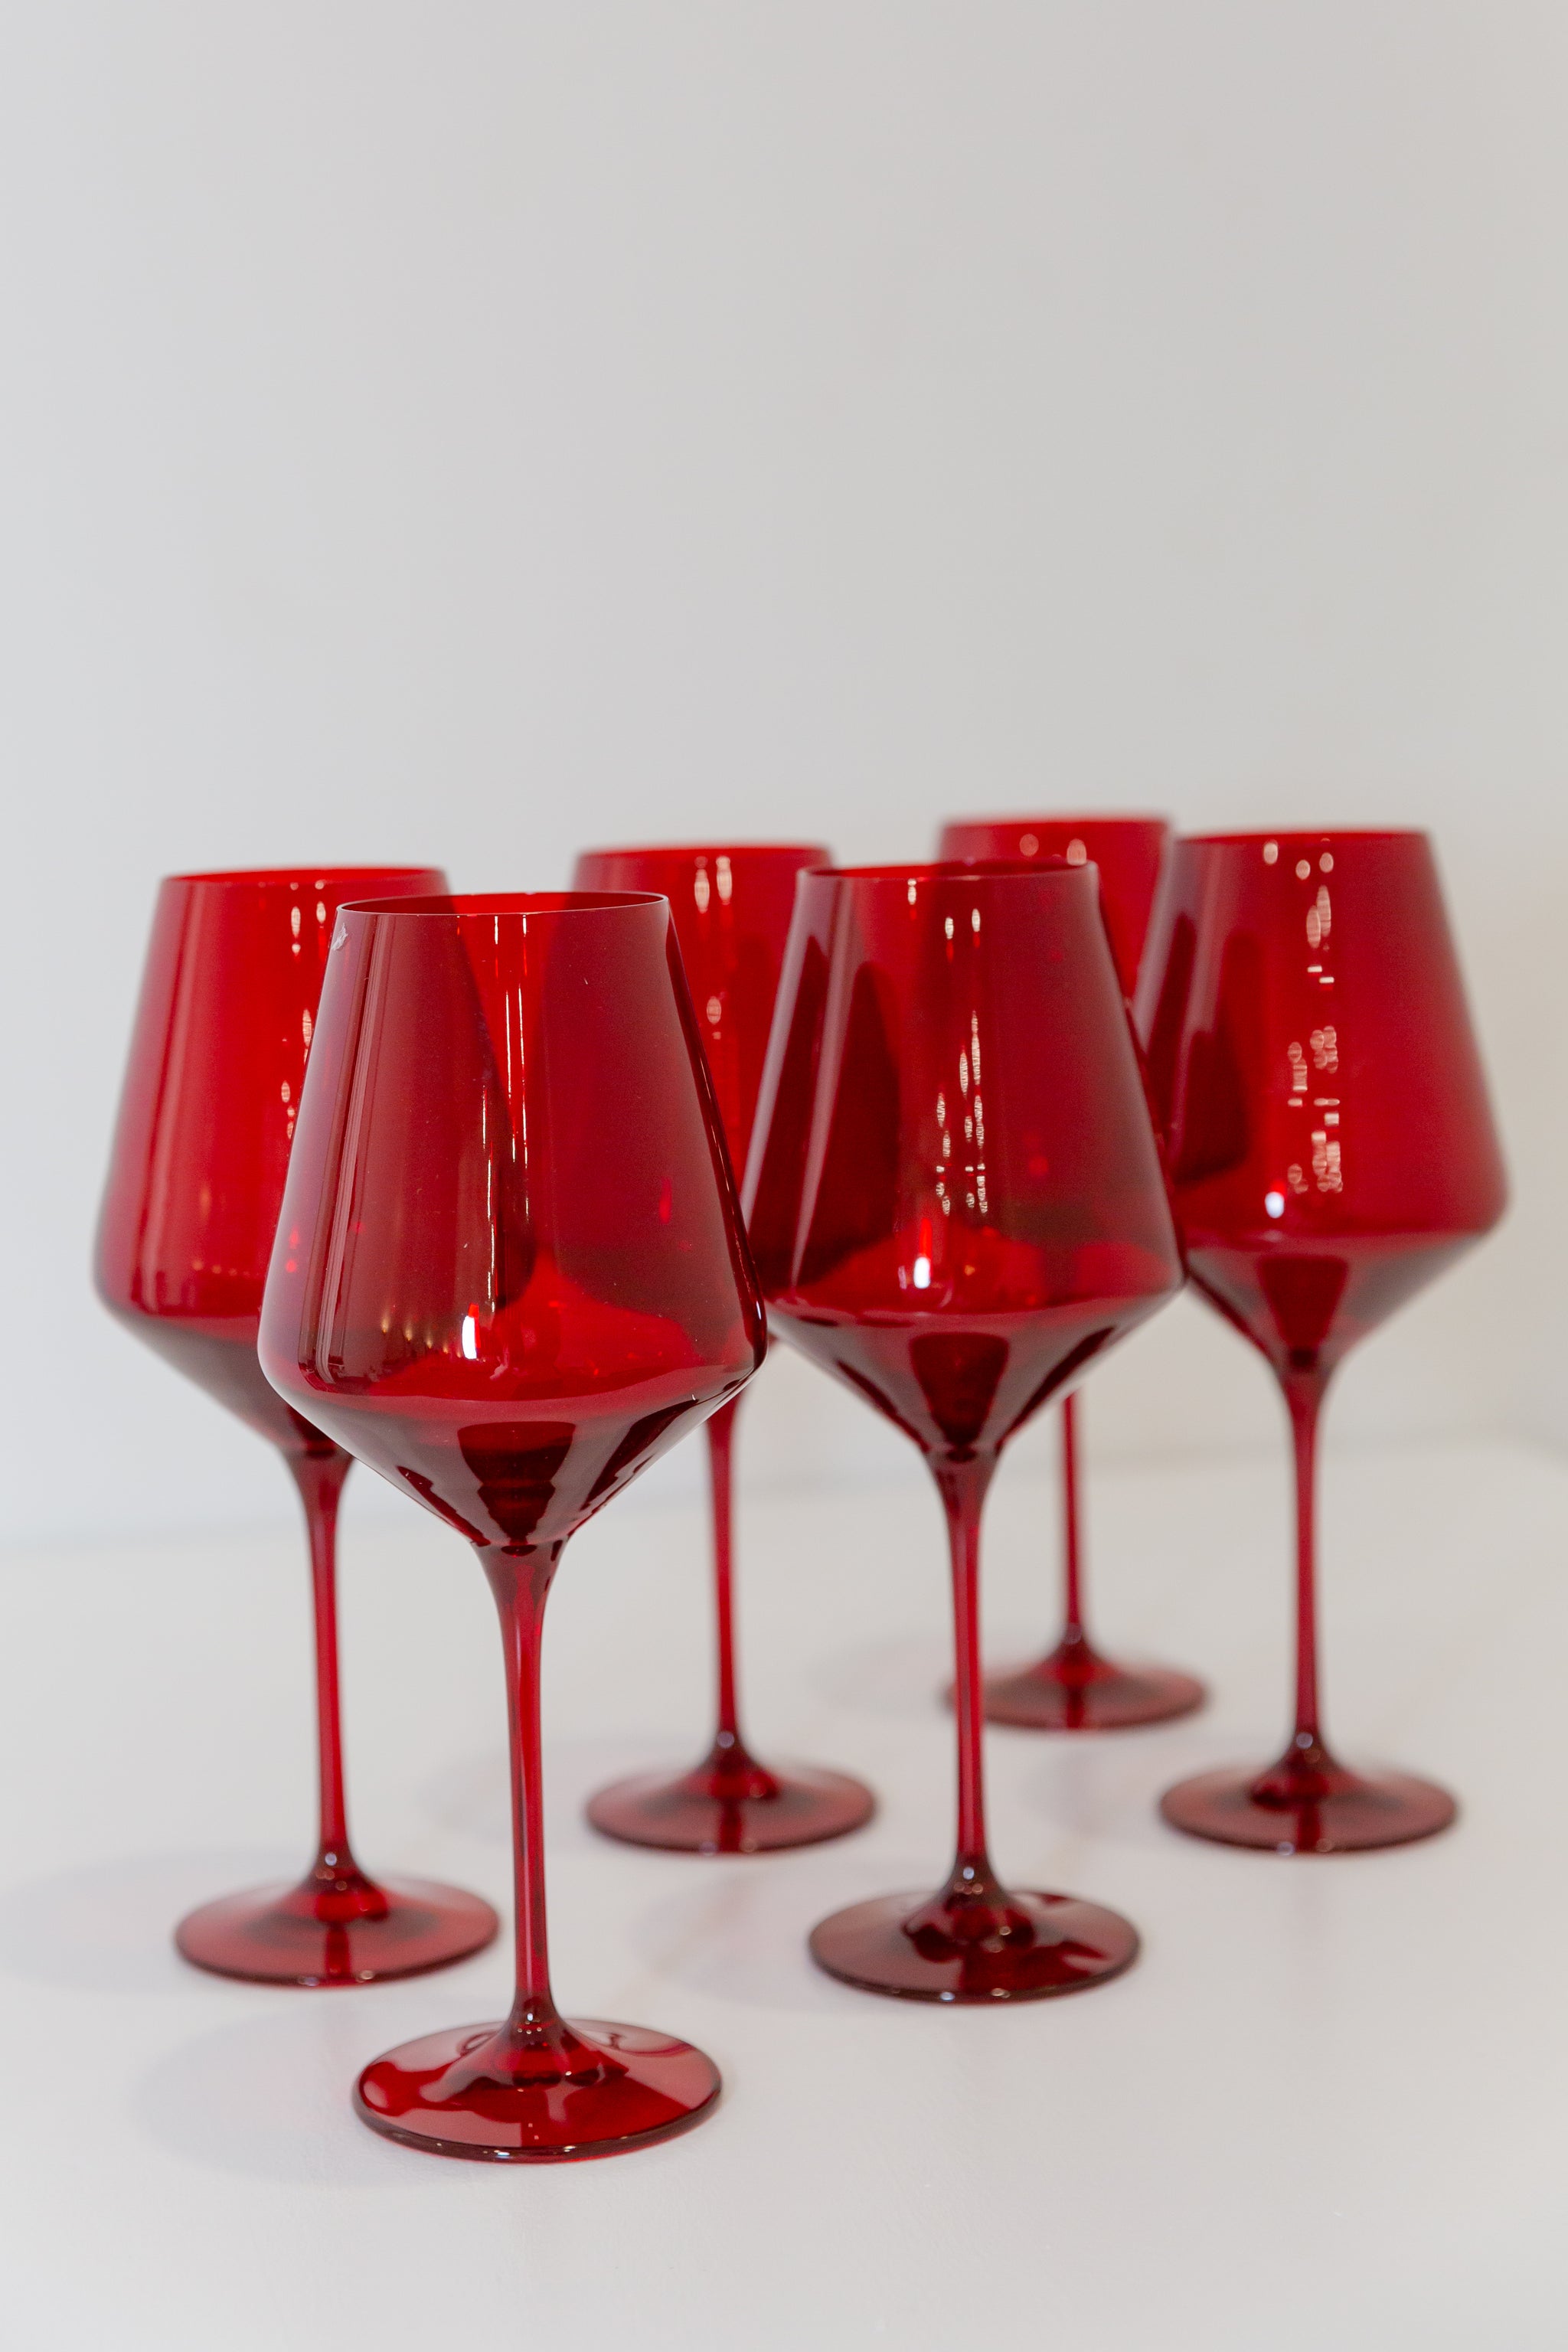 Swedish Dish Cloth, Red Wine Carafe & Glass - d'Vine Gourmet